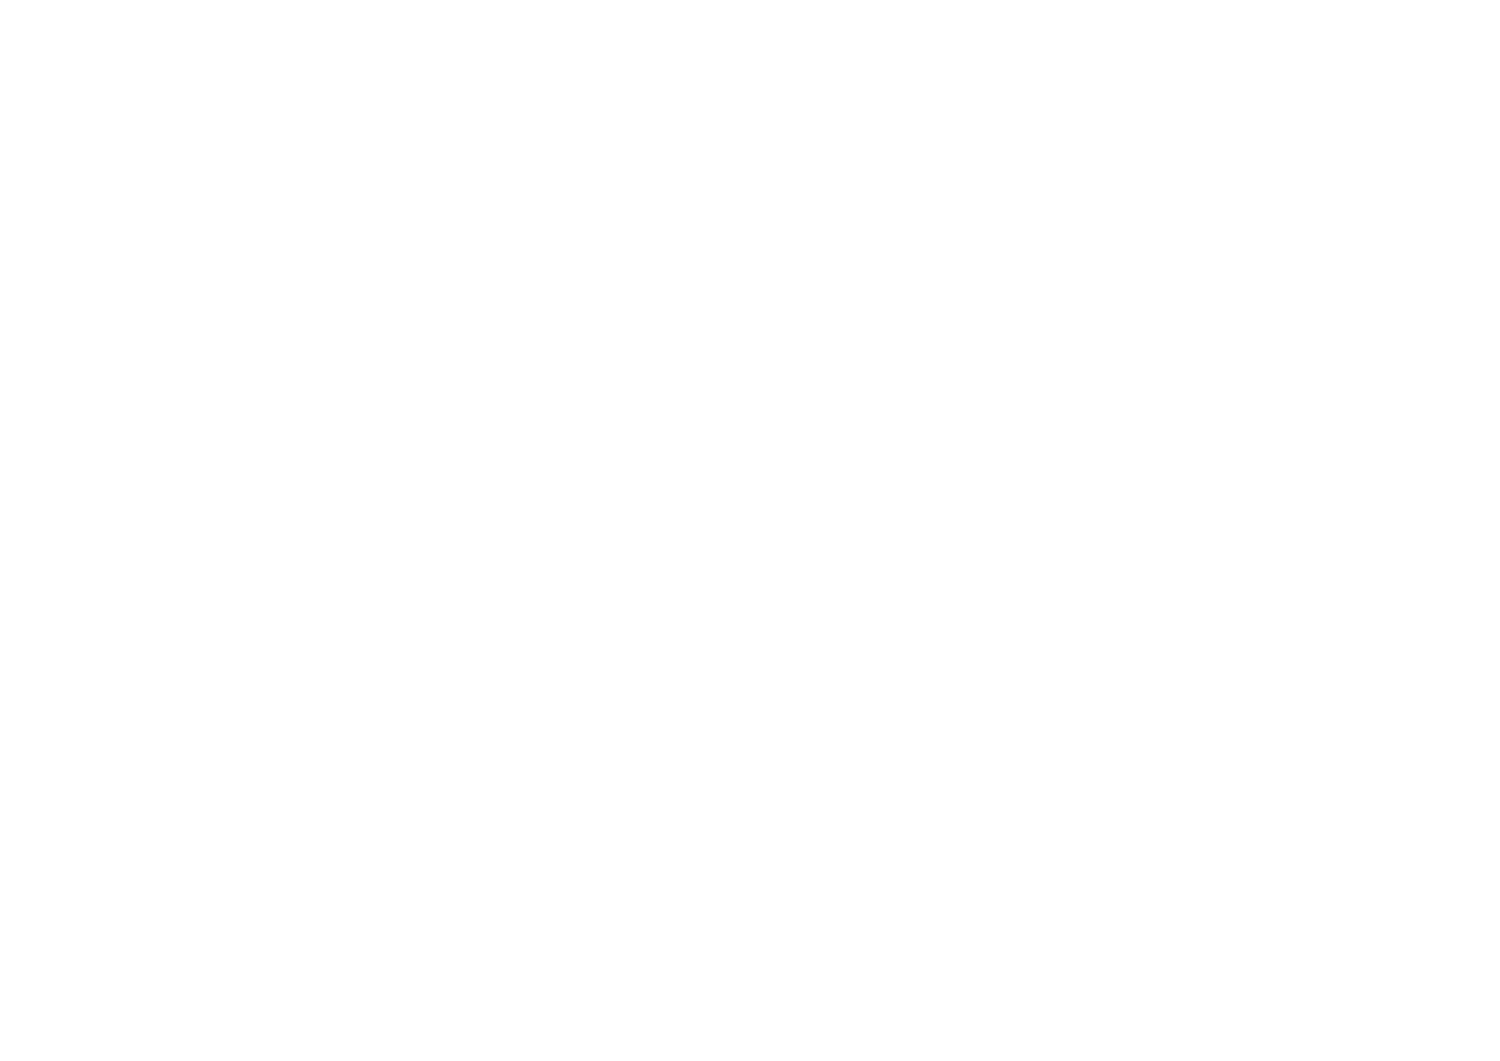 Mezz Coleman